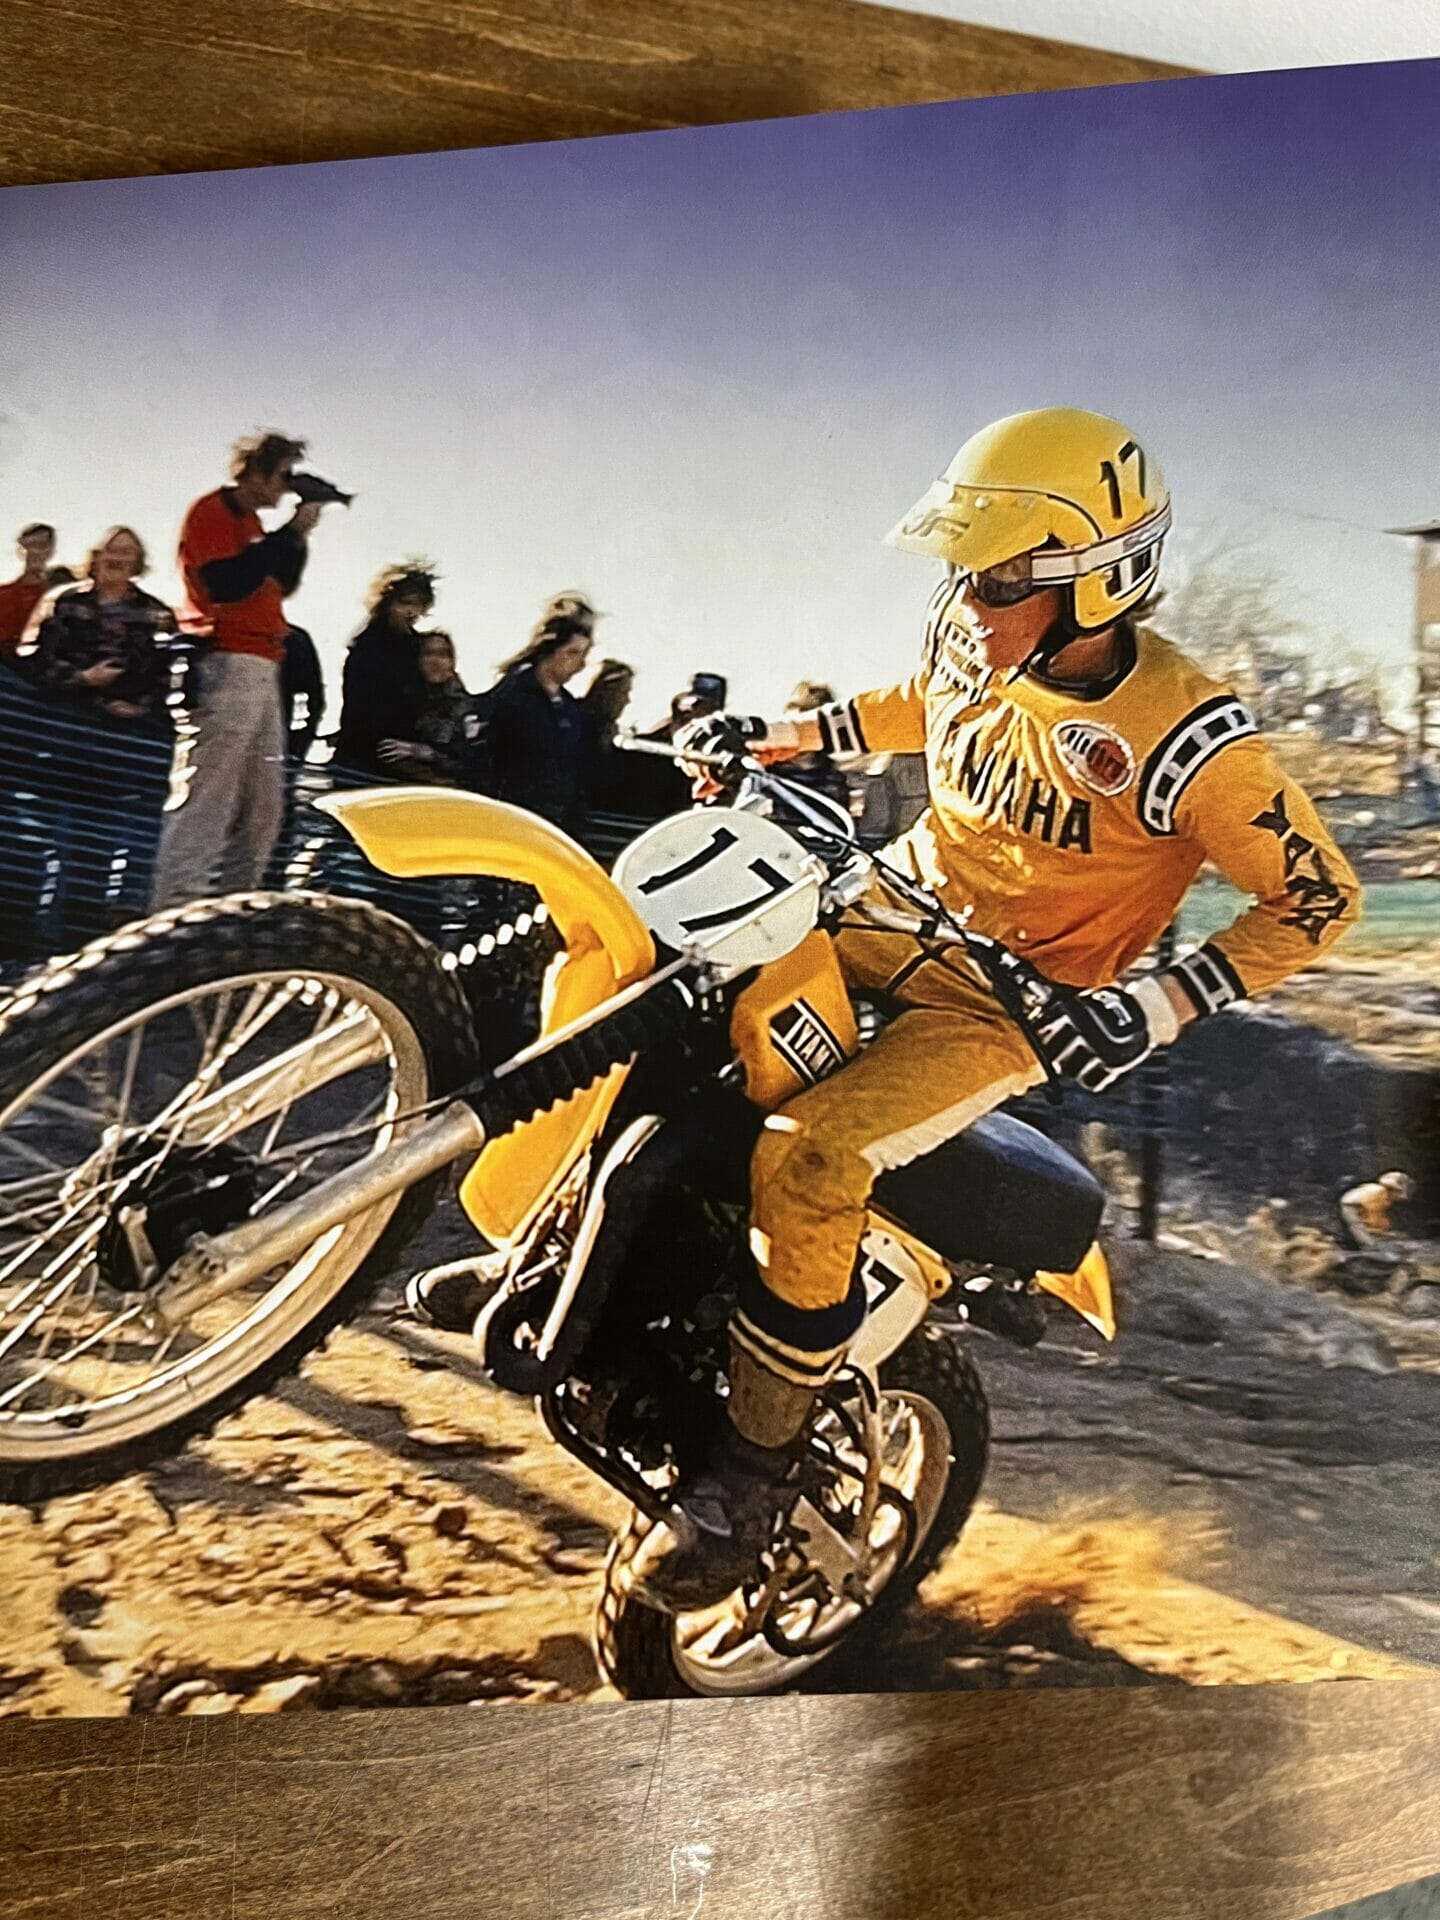 The Golden Era of Motocross, Broc Glover